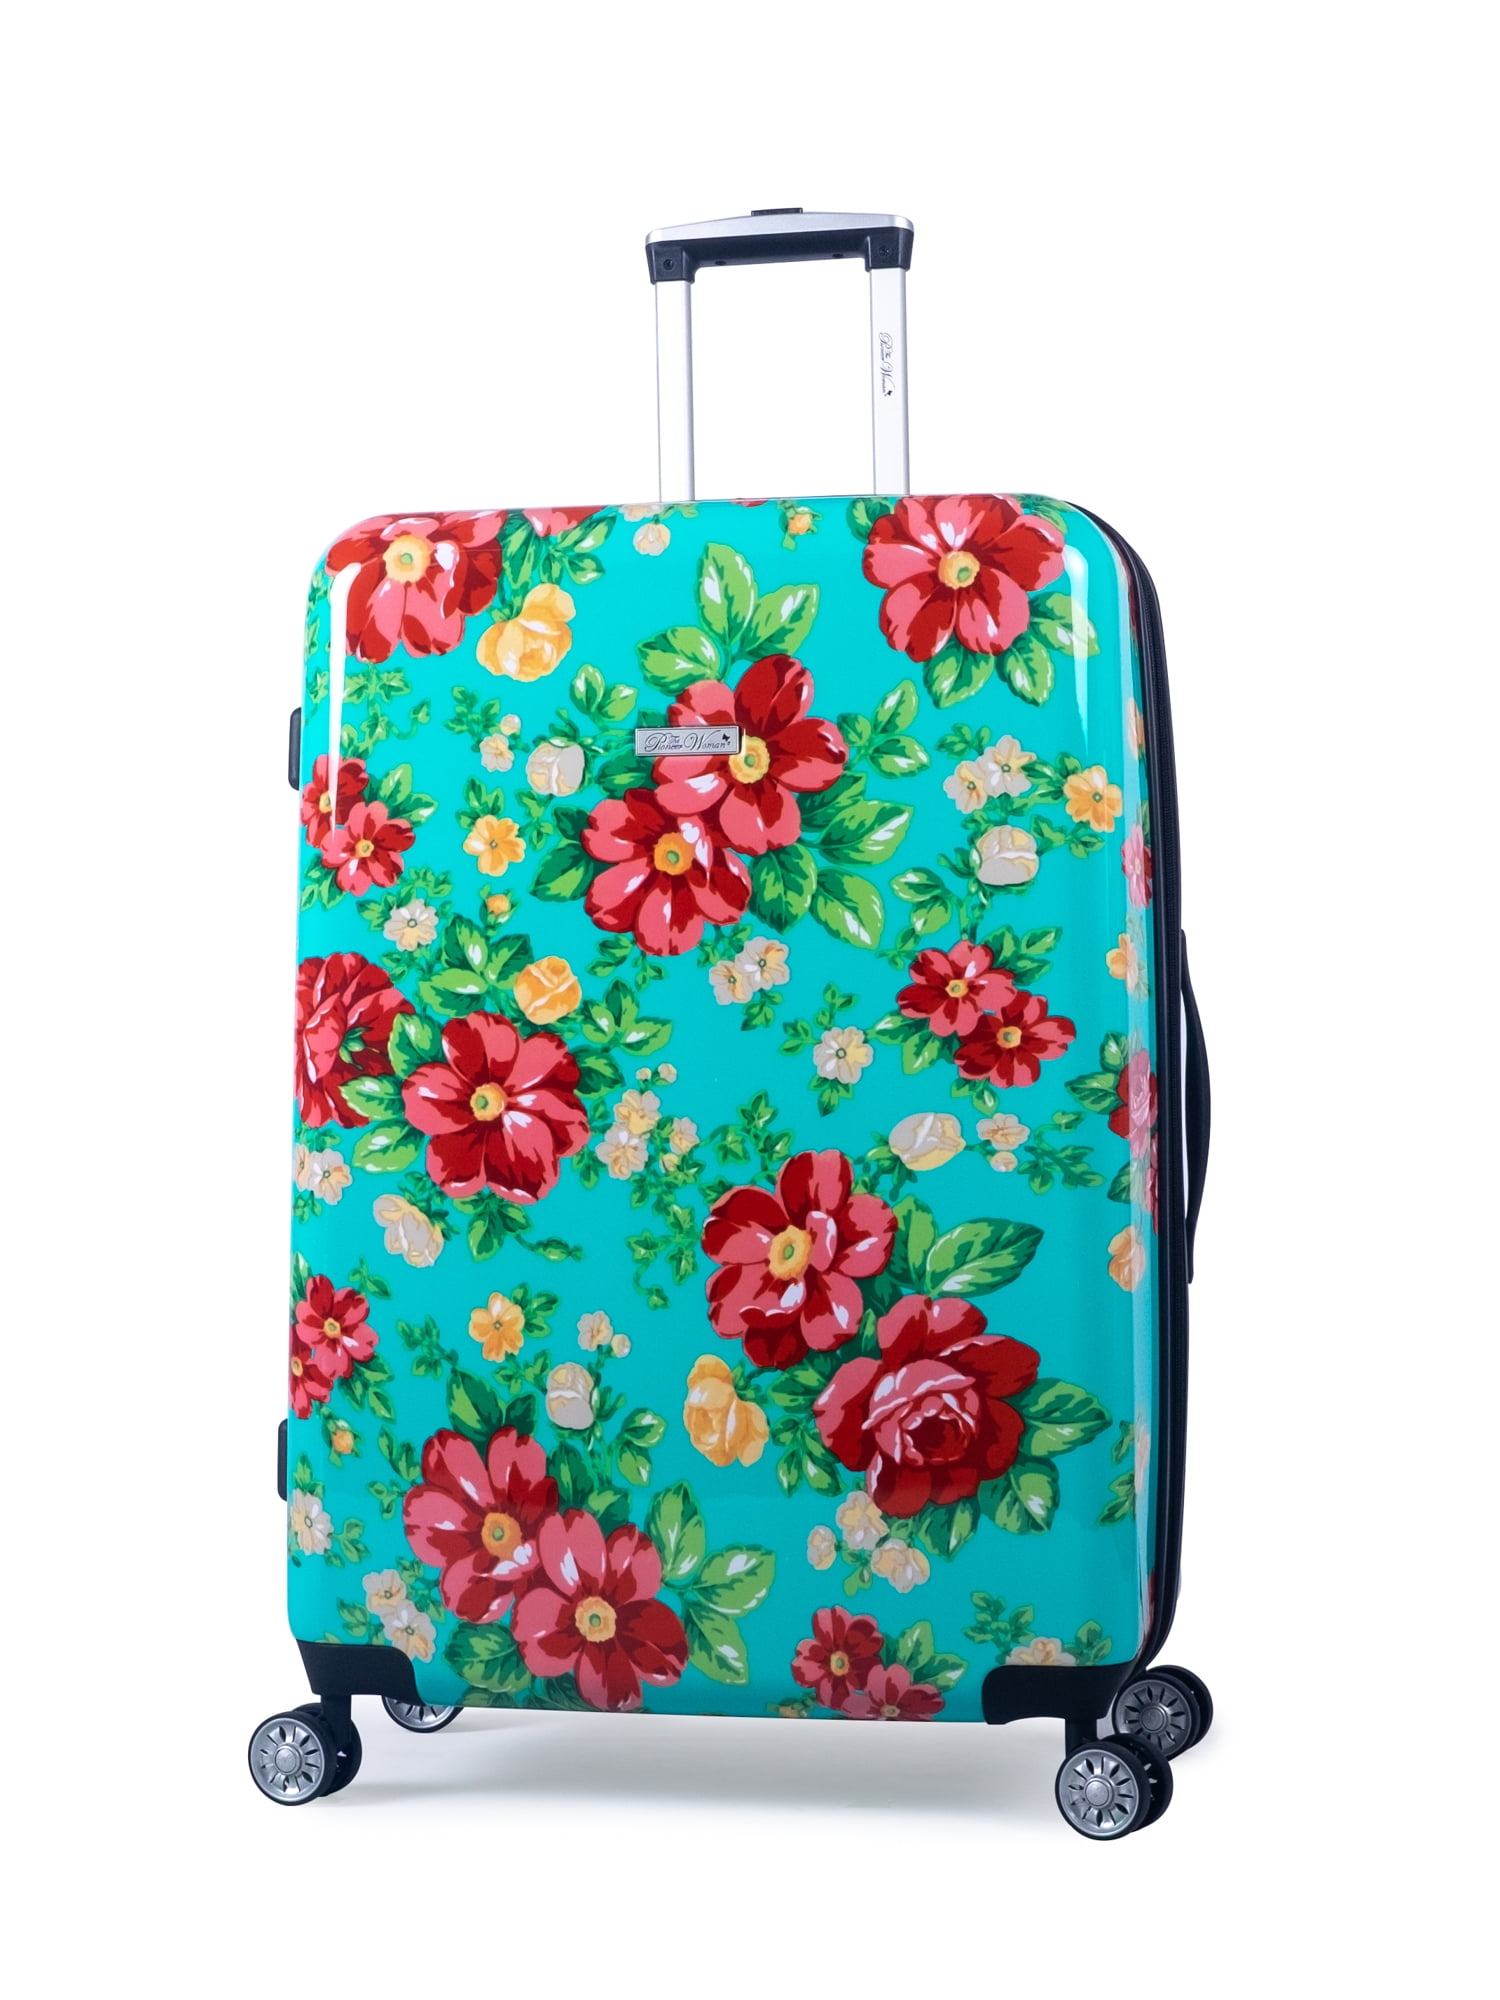 LedBack Spandex Luggage Cover Vintage Floral Printing Travel Suitcase Protector 